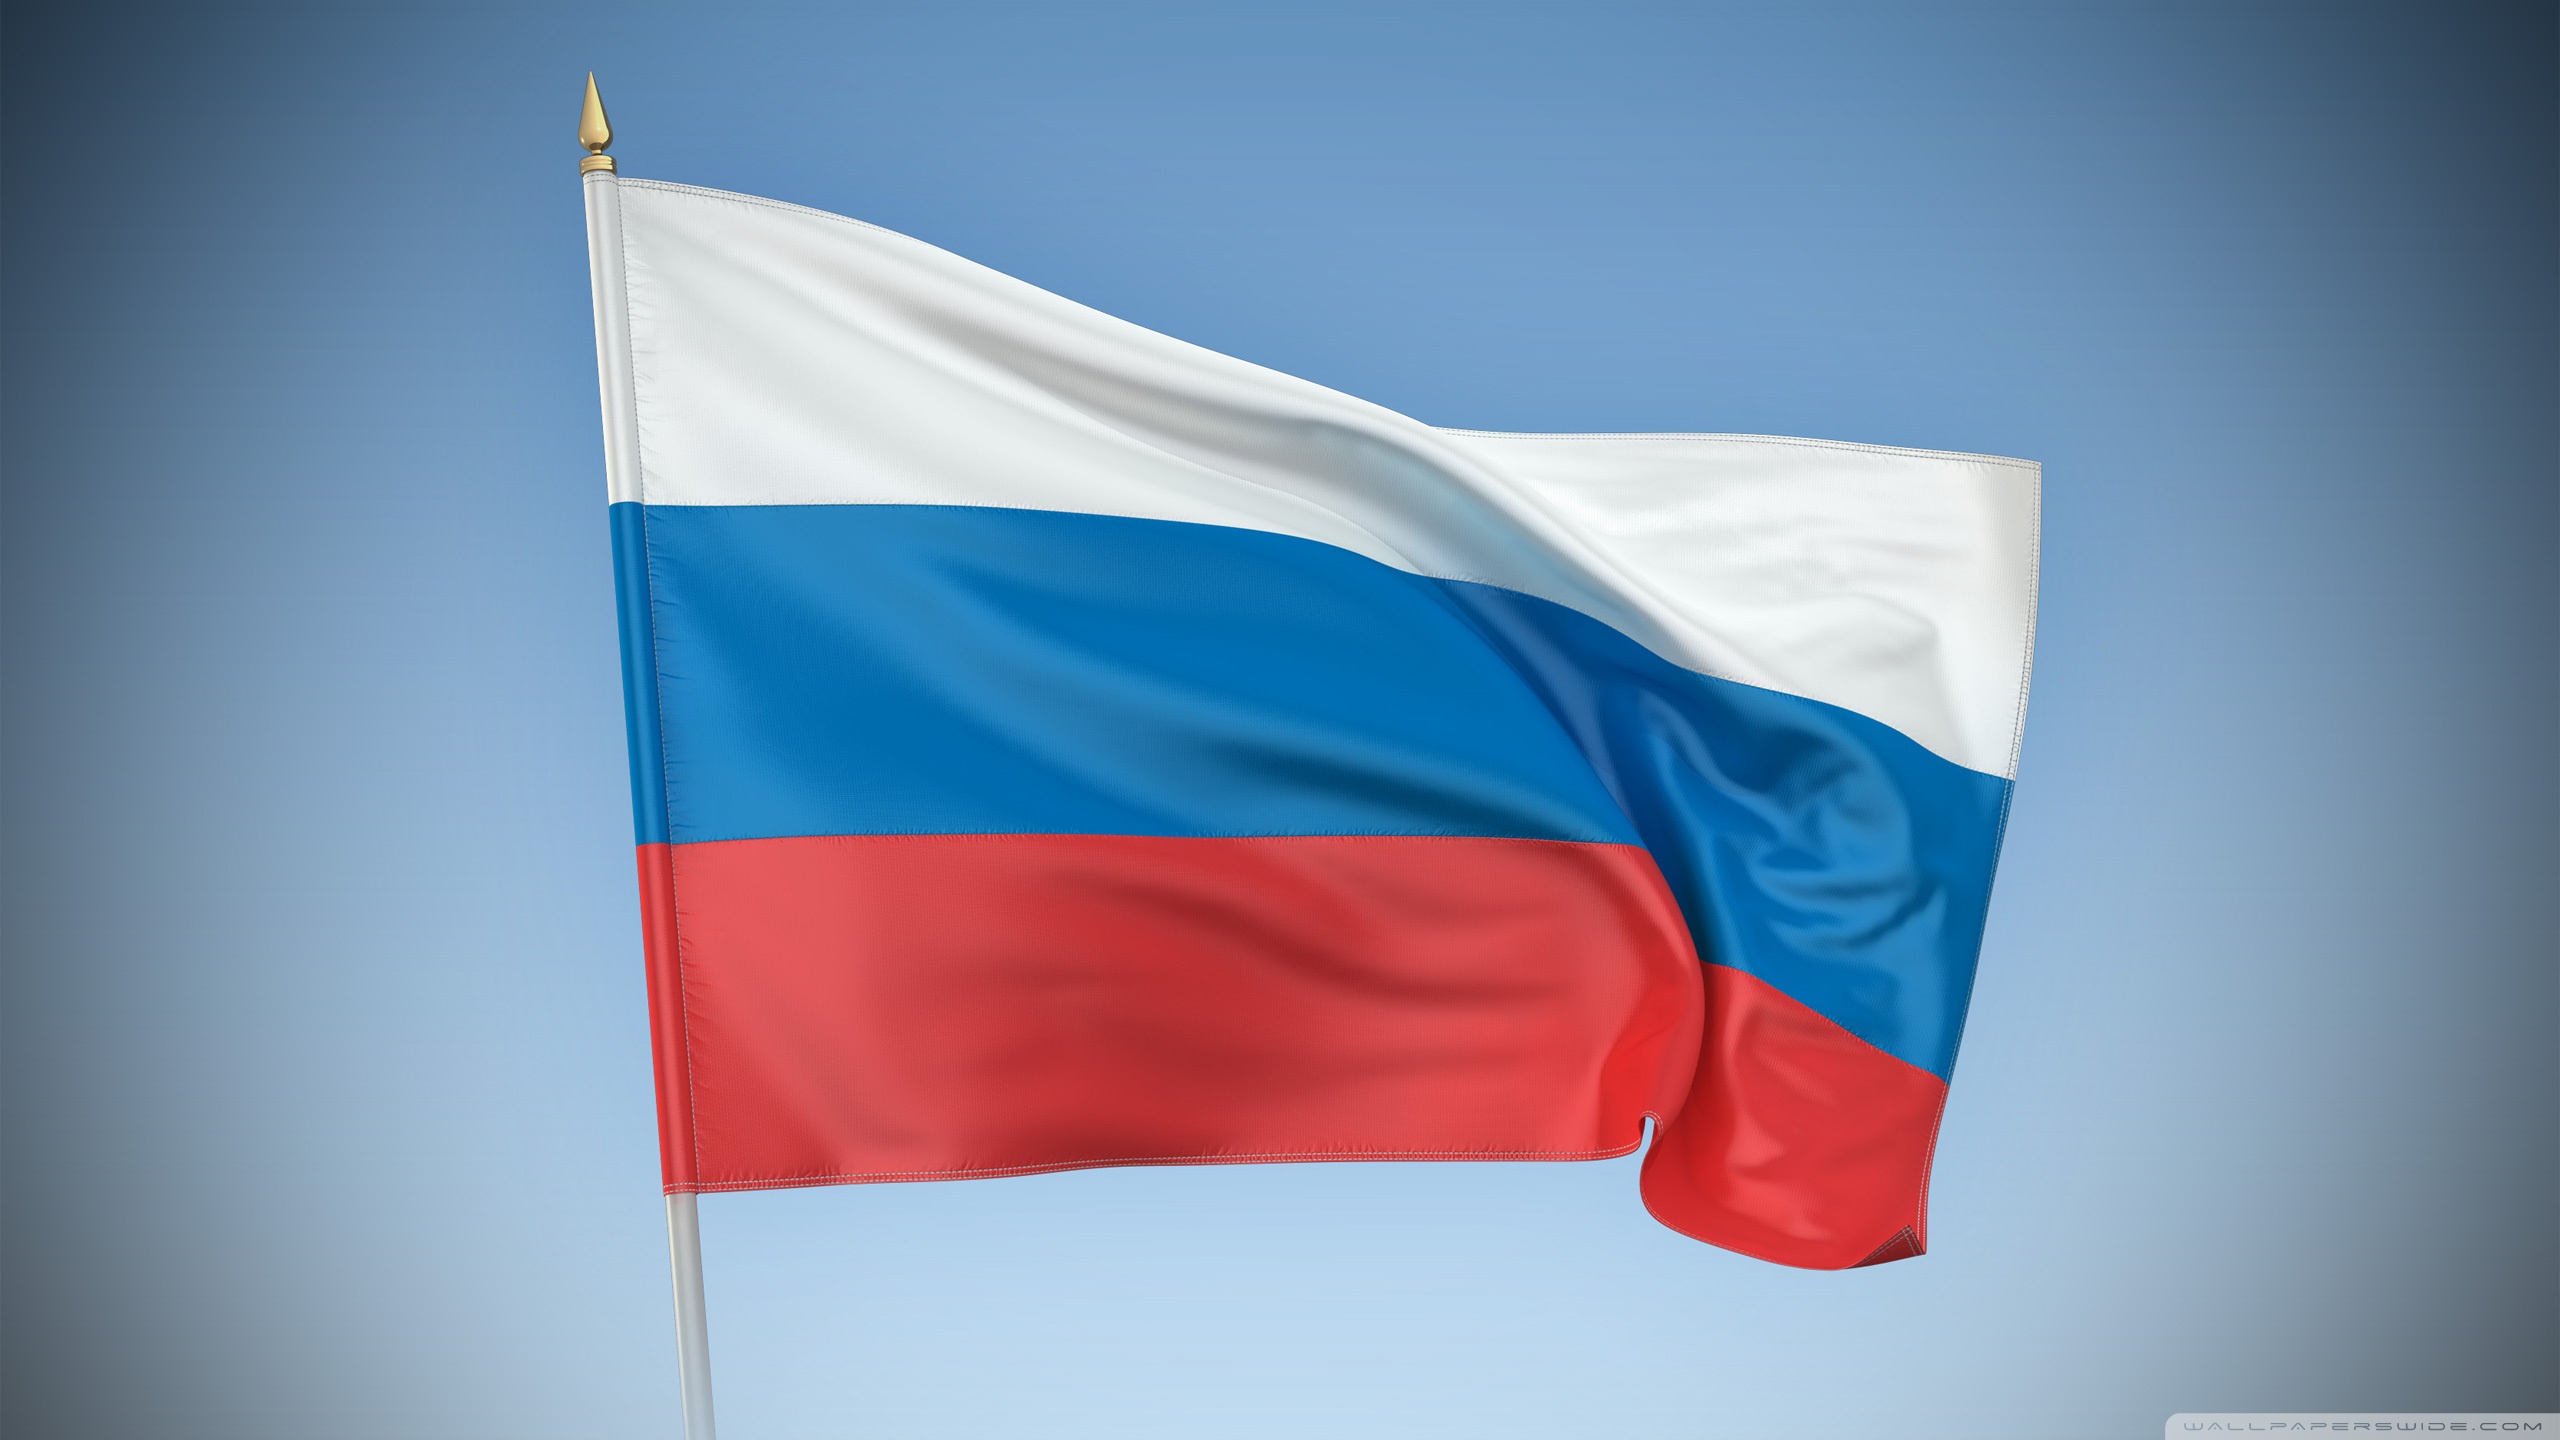 russian flag iphone wallpaper